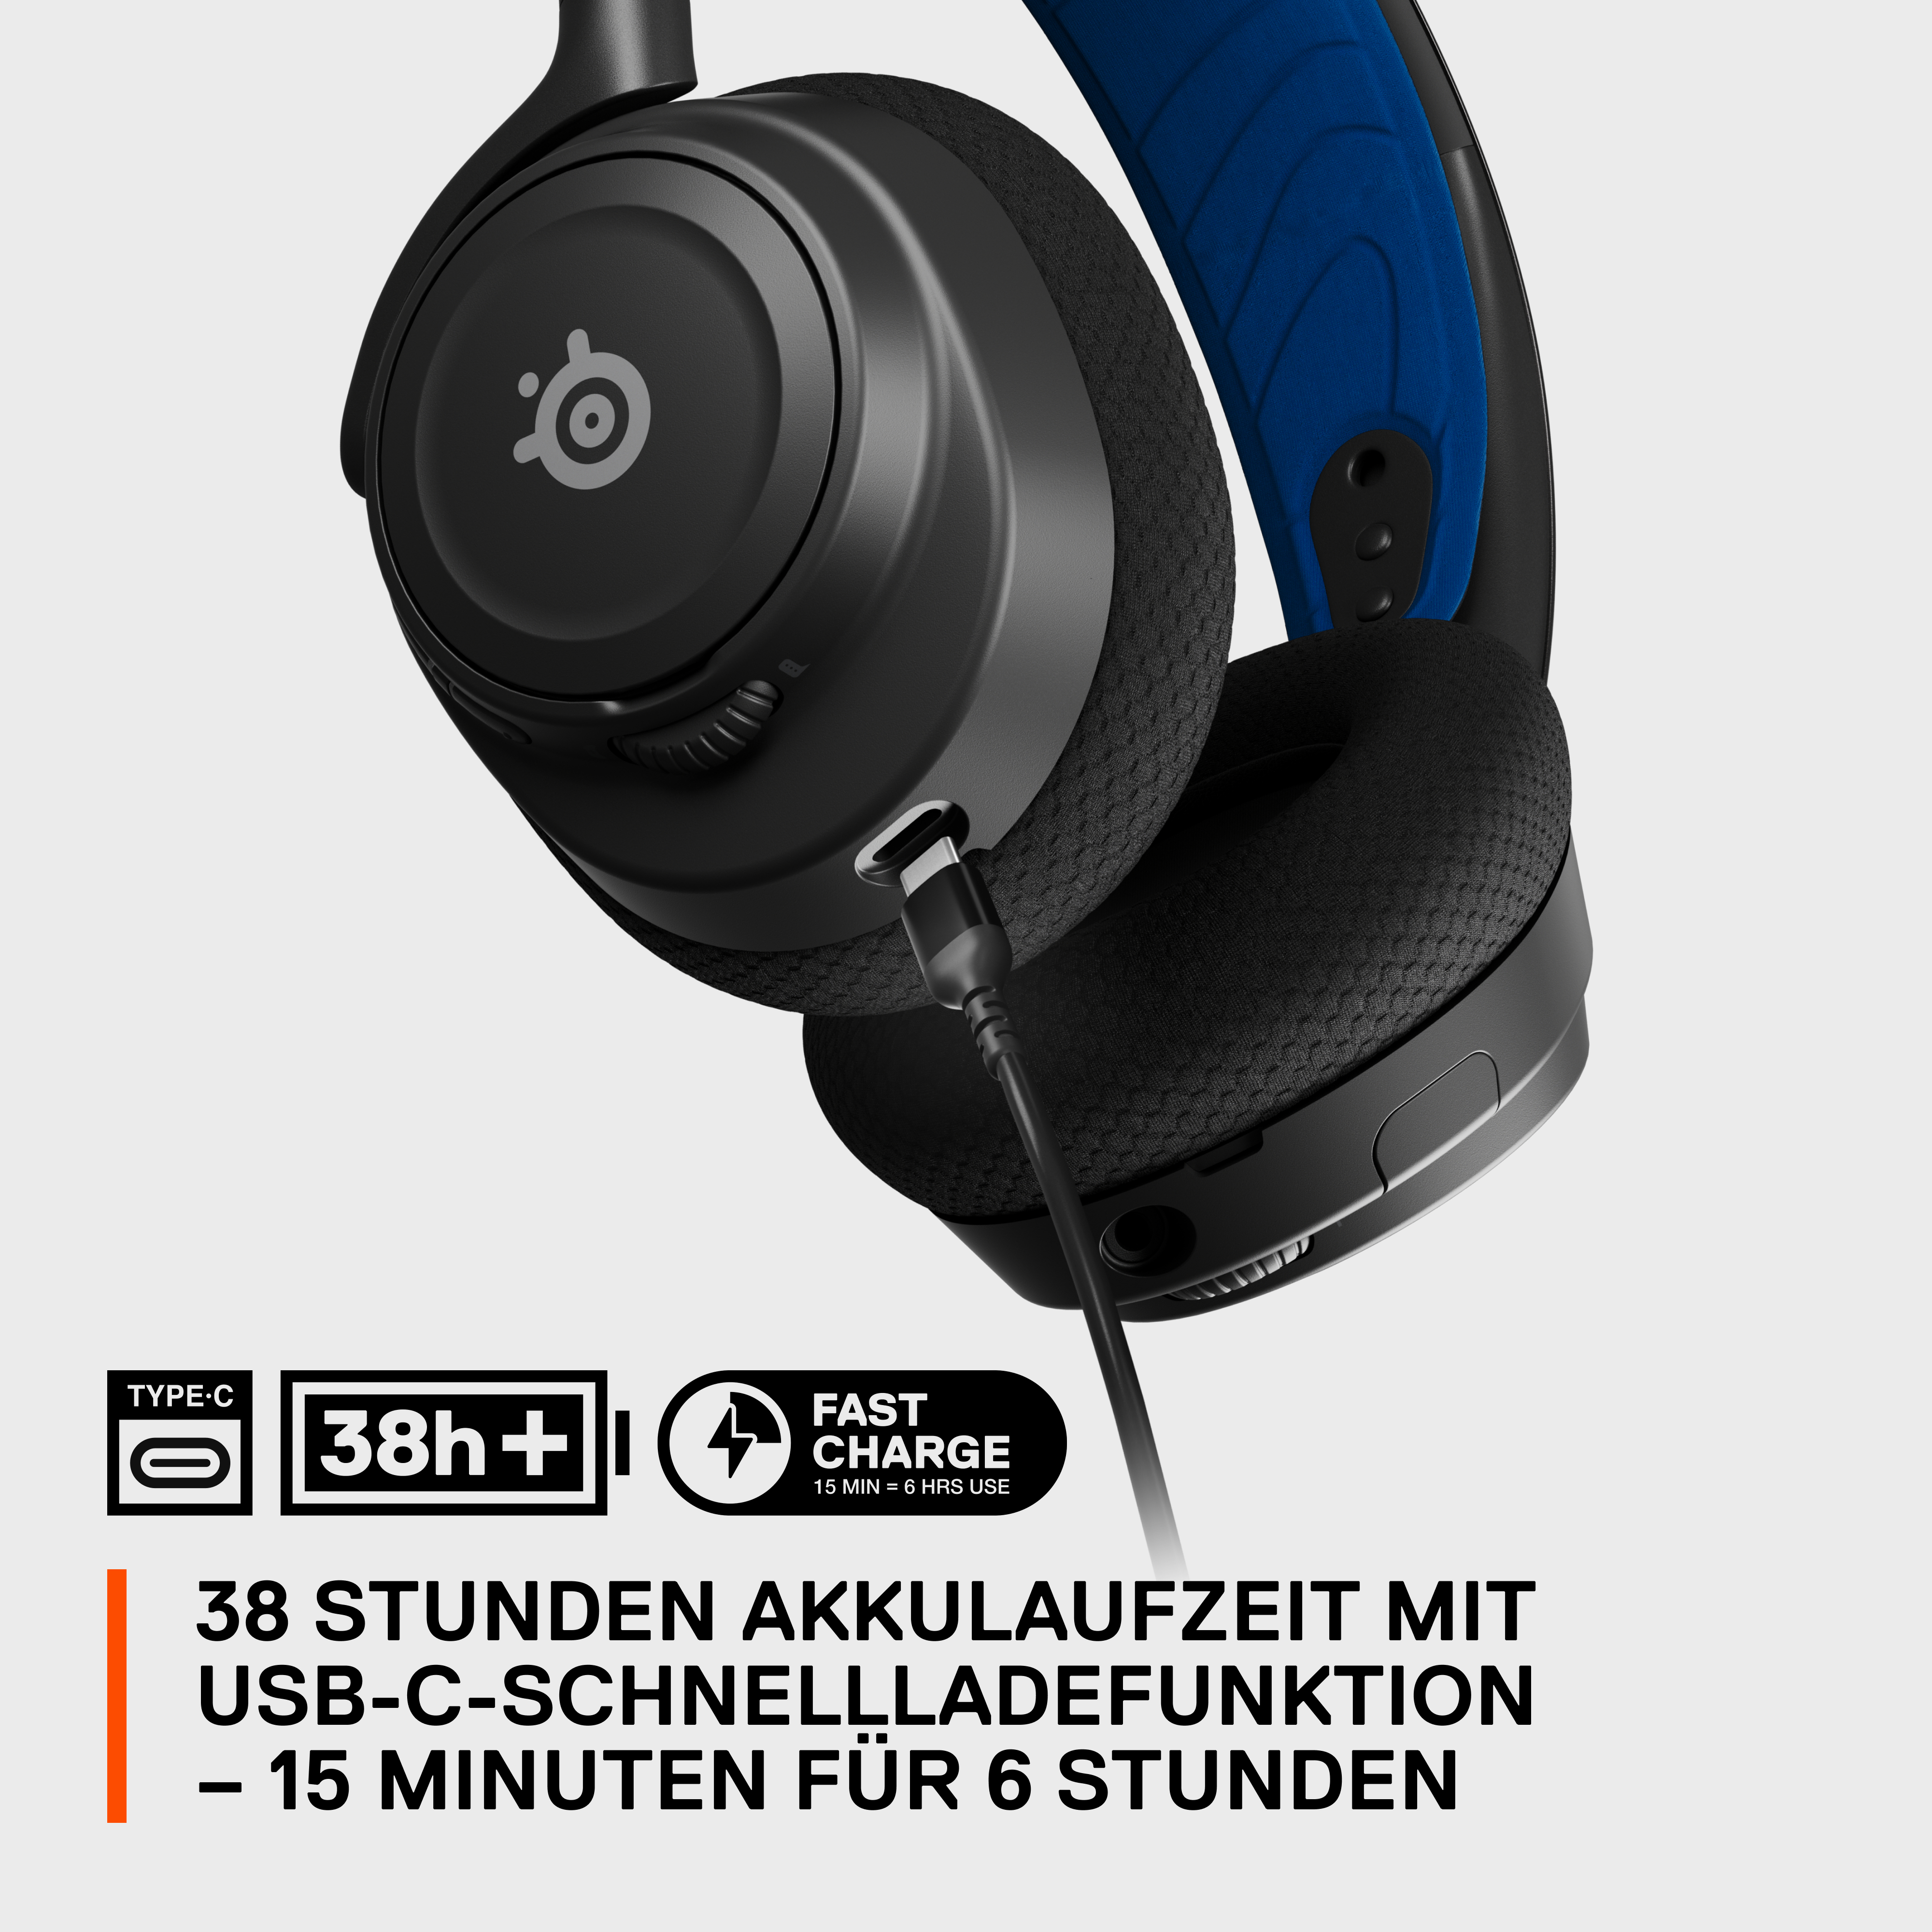 Nova Gaming Schwarz STEELSERIES 7P, Over-ear Arctis Bluetooth Headset